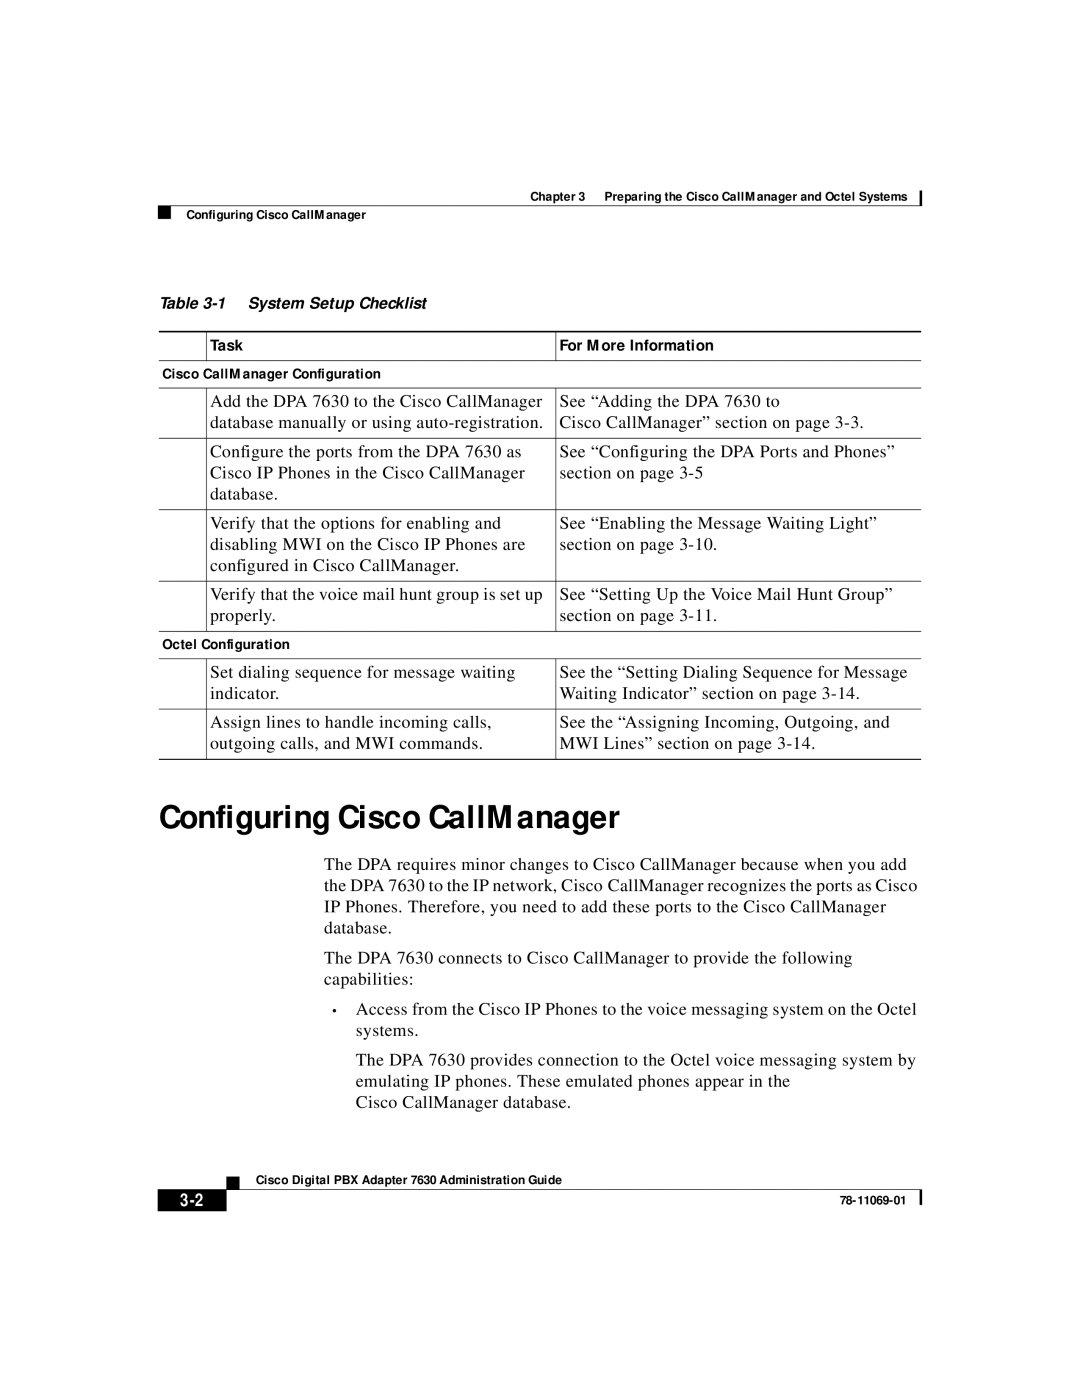 3Com 78-11069-01 manual Configuring Cisco CallManager, Task, For More Information 